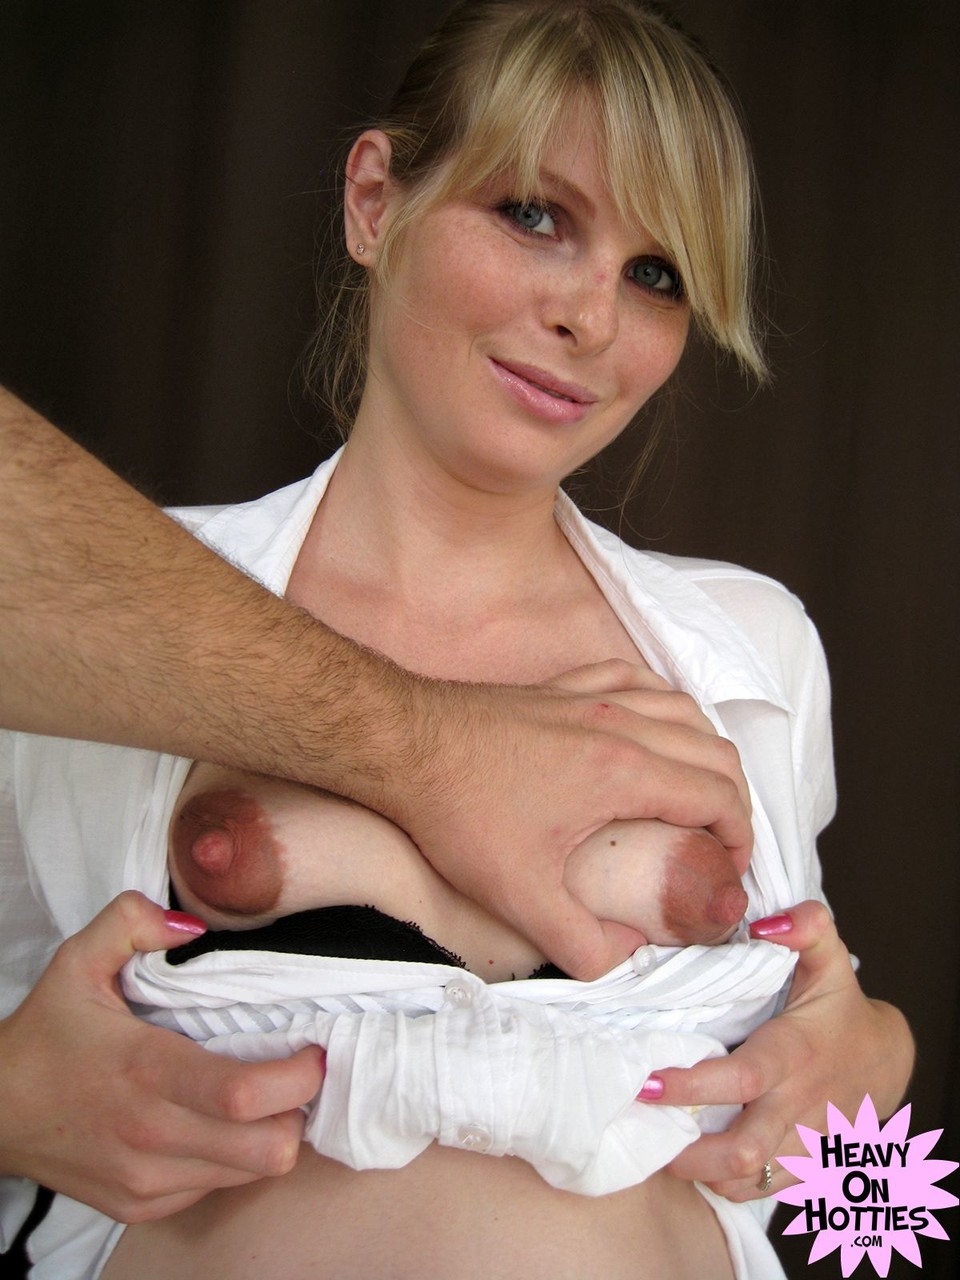 Pregnant amateur Wiska gets jizz on her face during a POV blowjob 色情照片 #424010546 | Heavy On Hotties Pics, Wiska, Pregnant, 手机色情